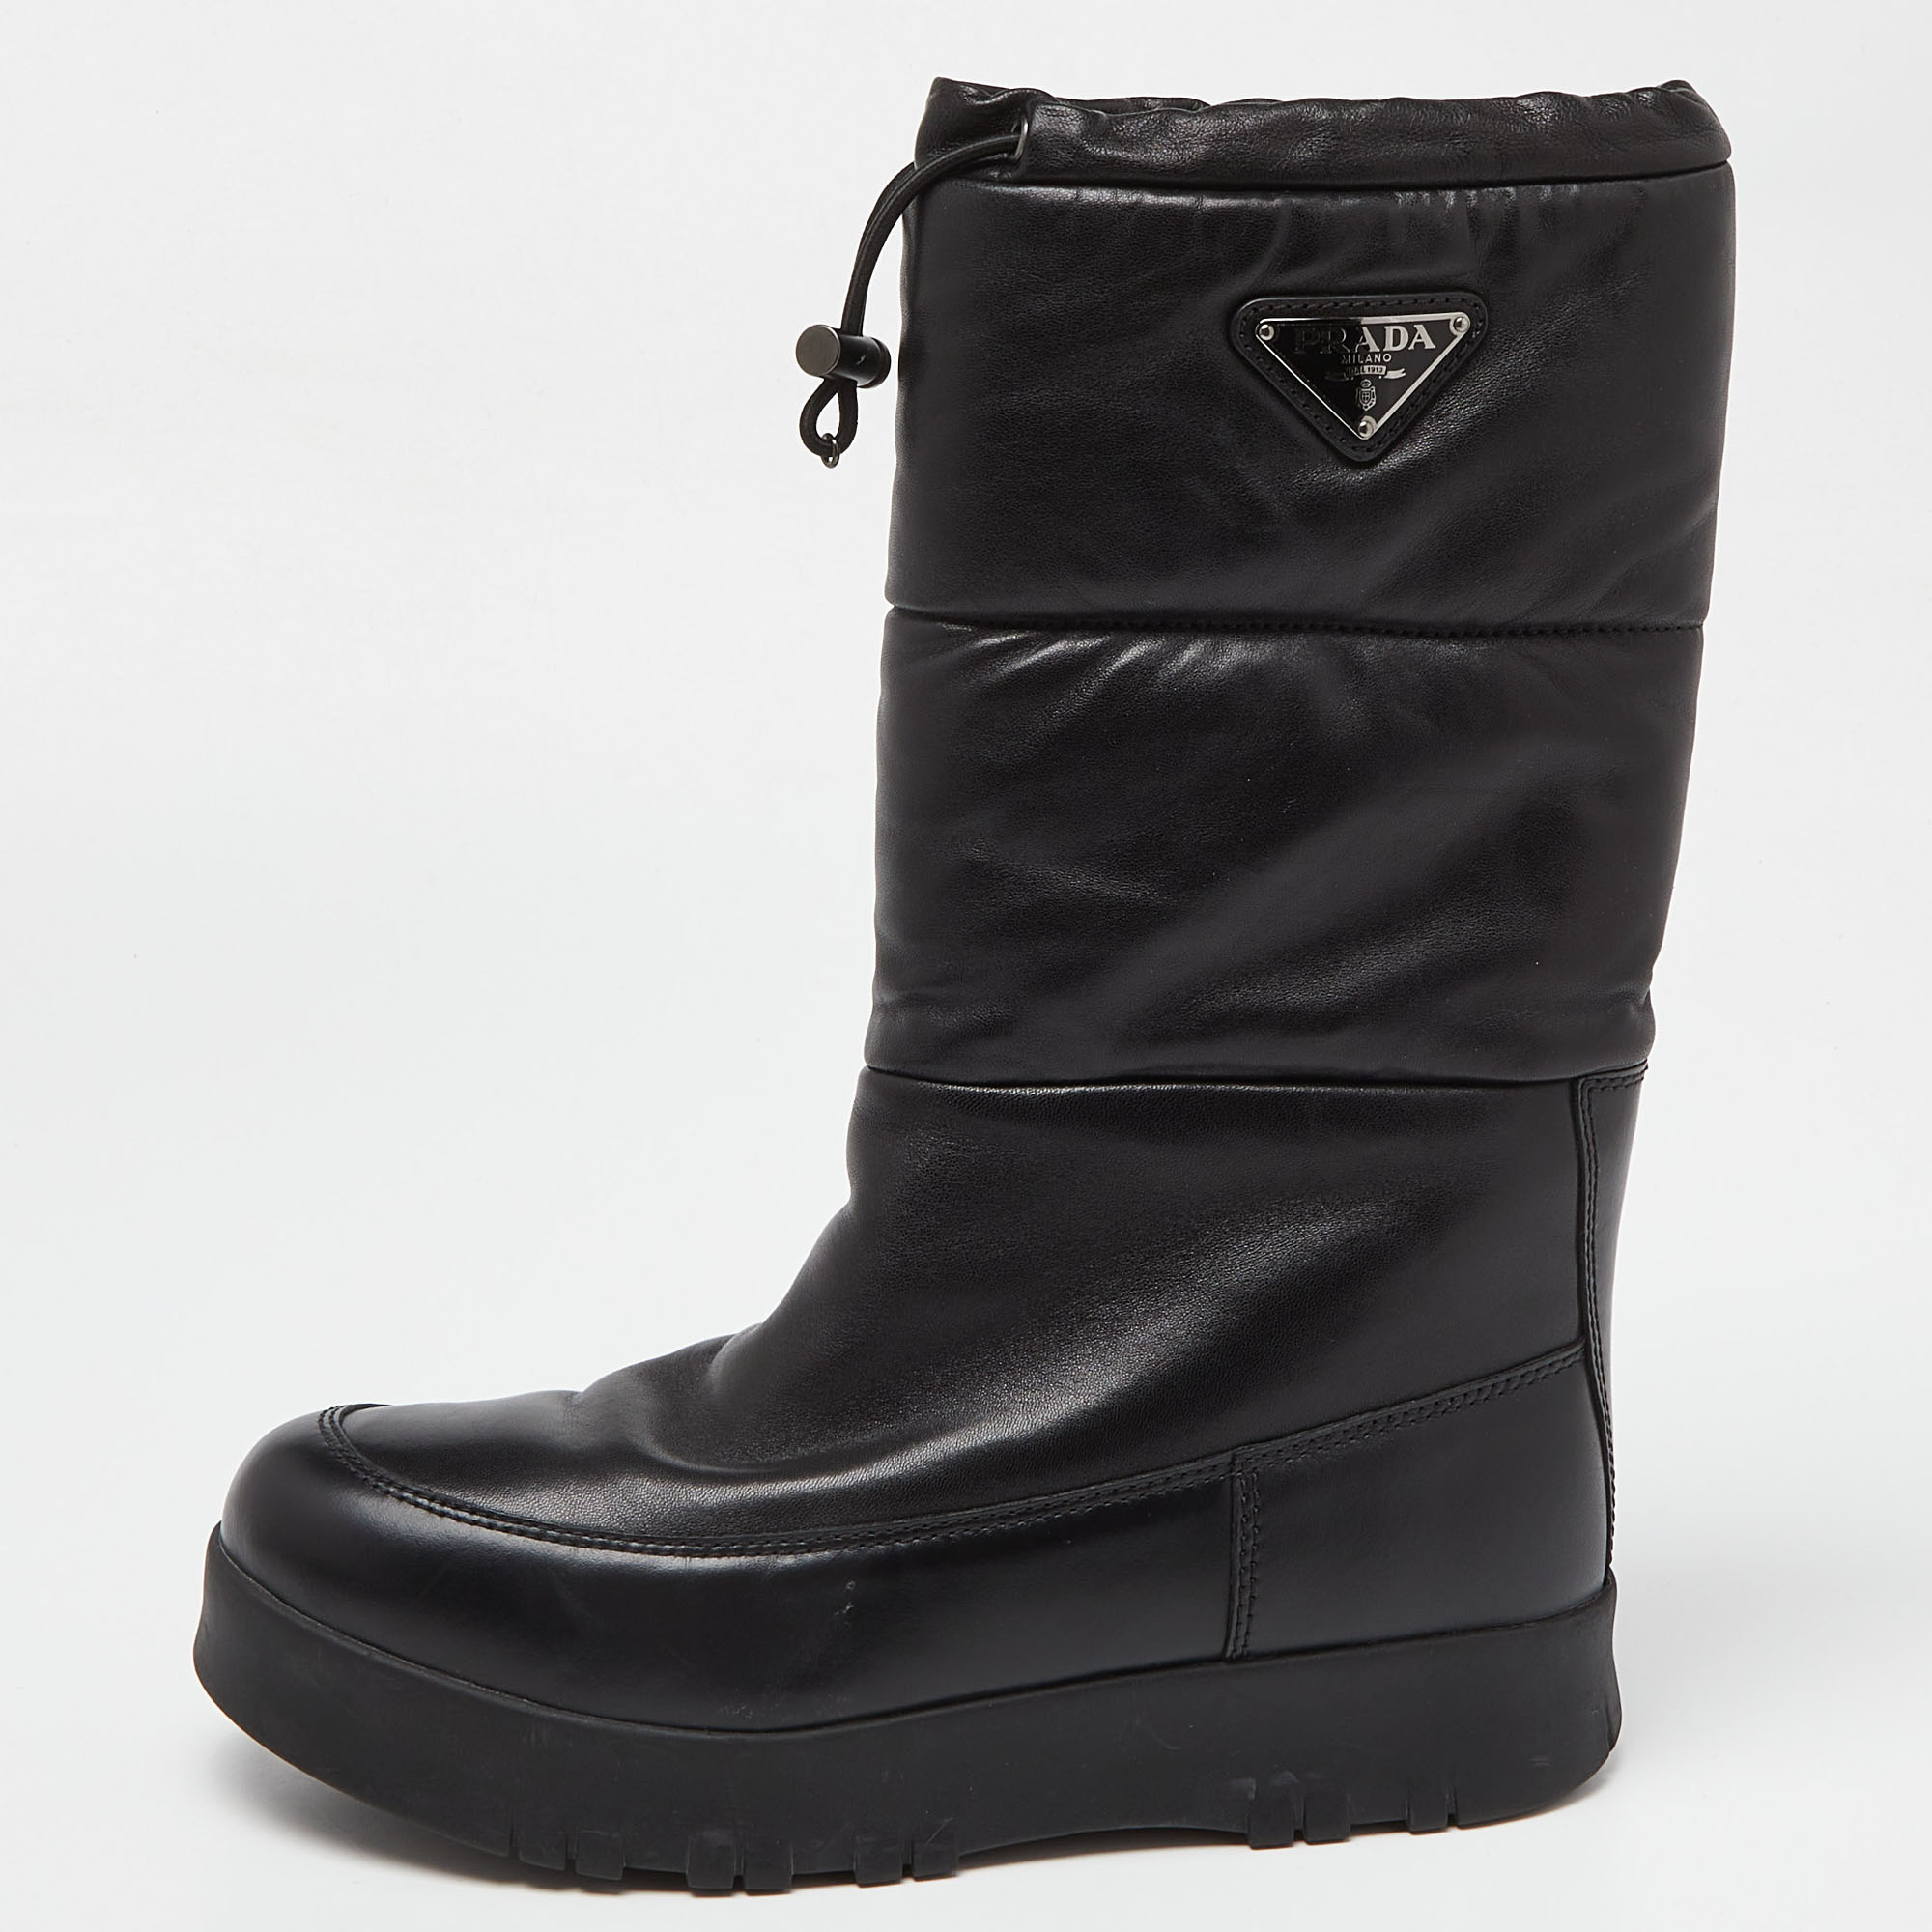 Prada sport prada black leather knee length boots size 39.5